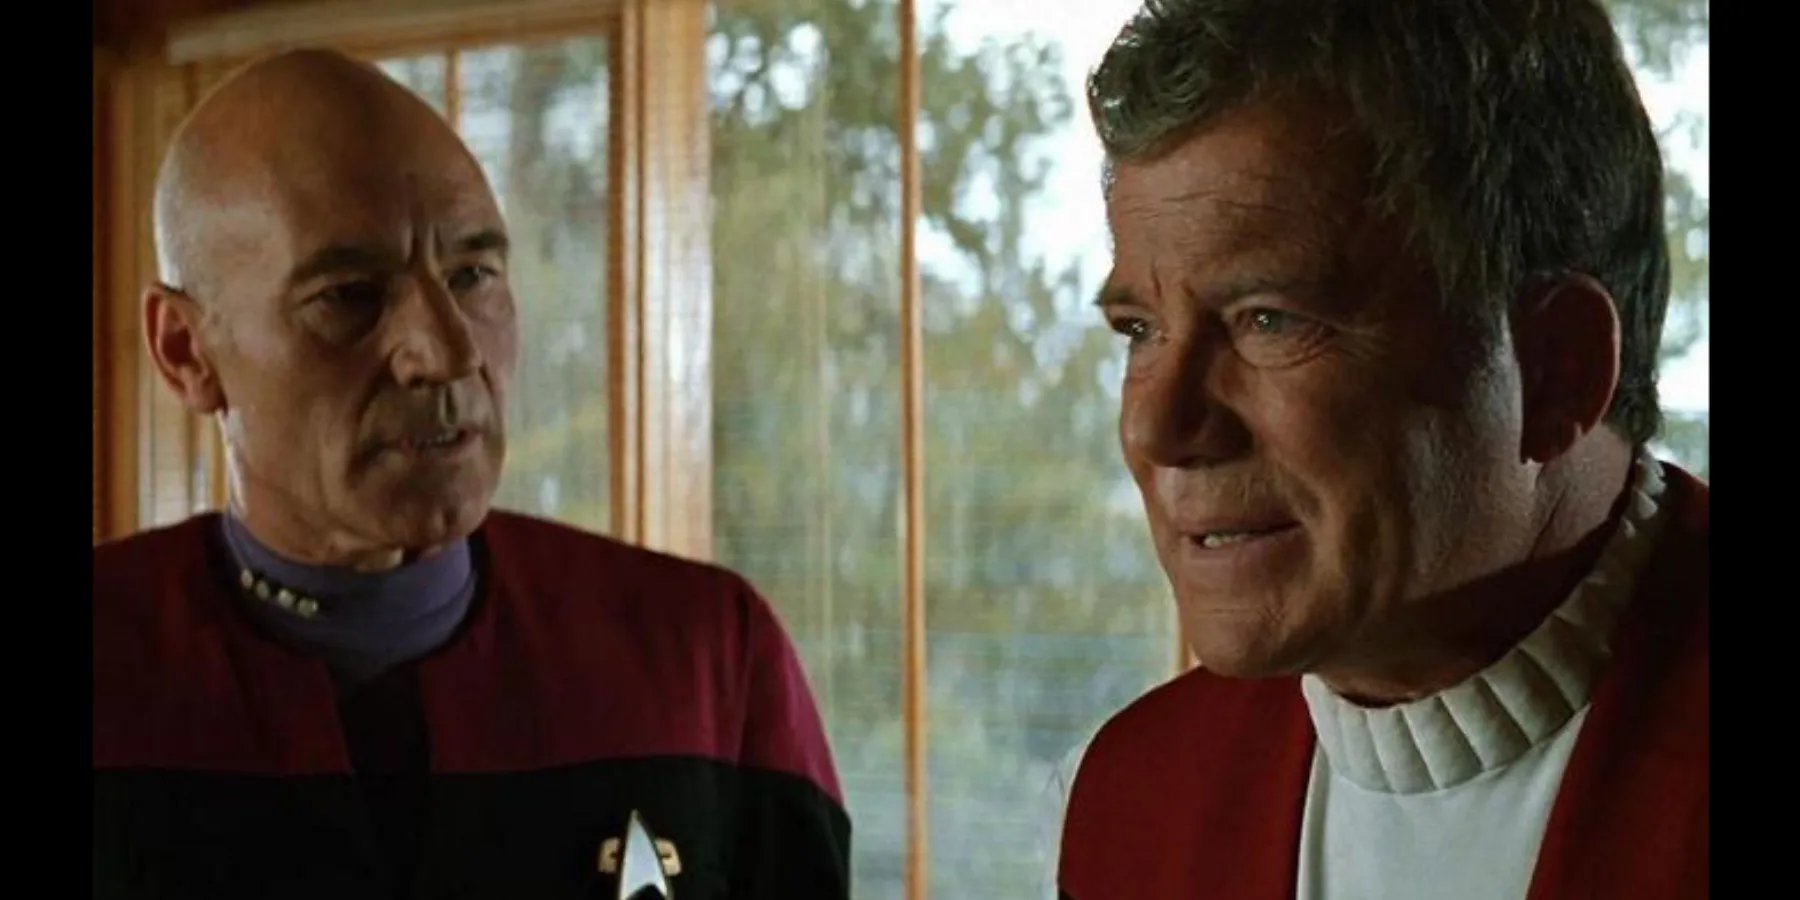 Kirk and Picard